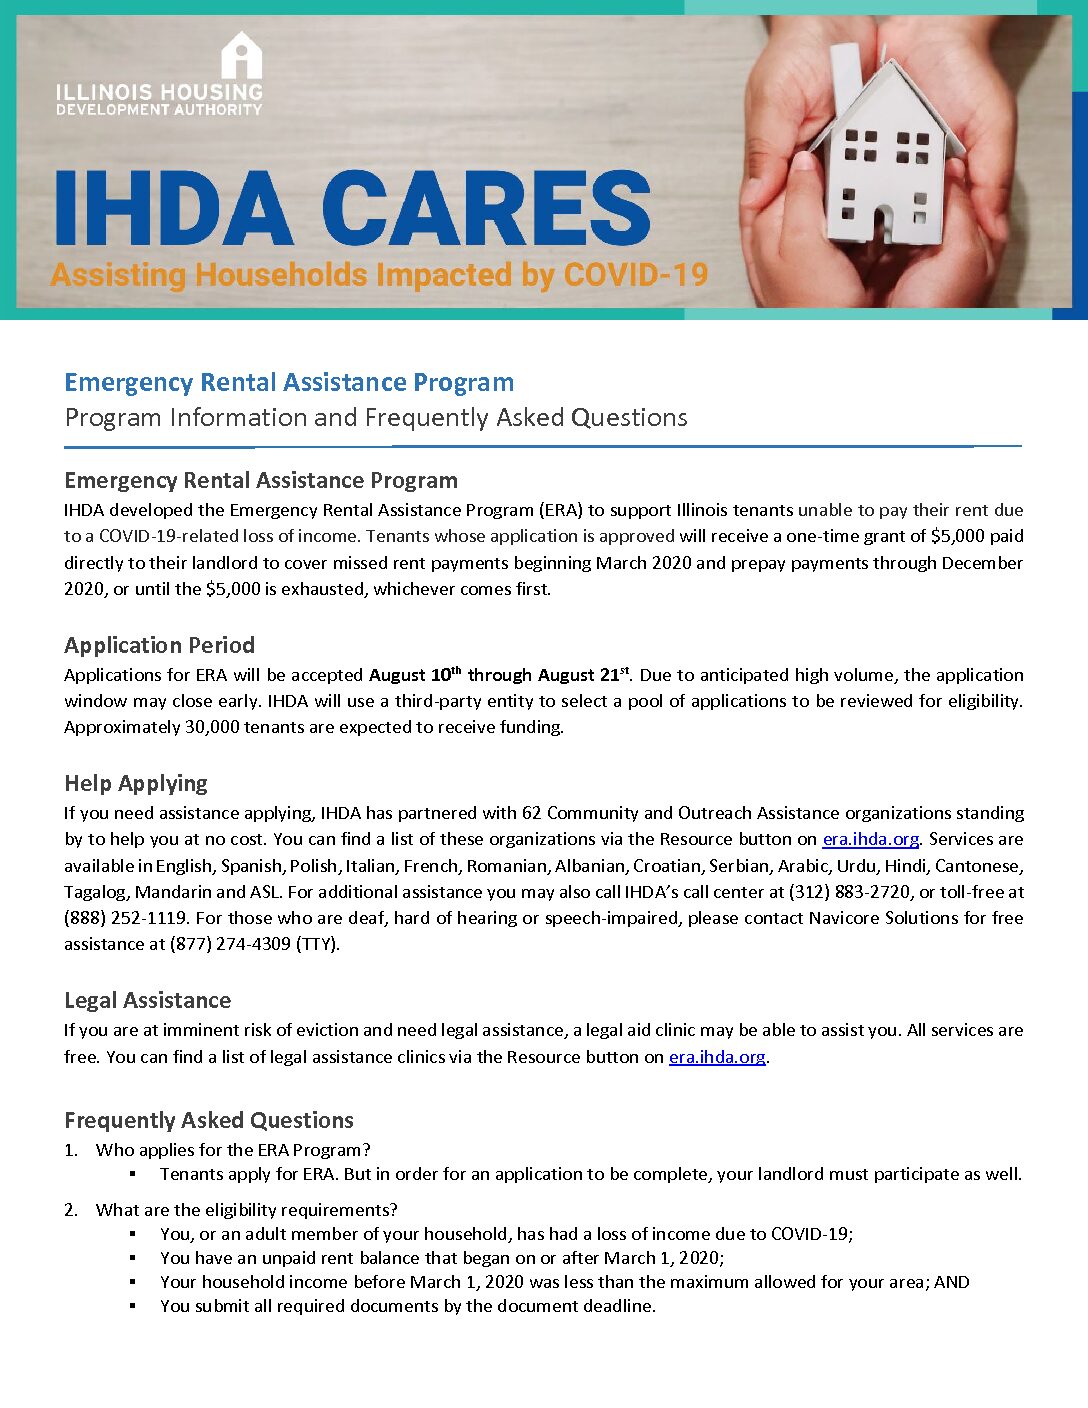 IHDA Emergency Rental Assistance